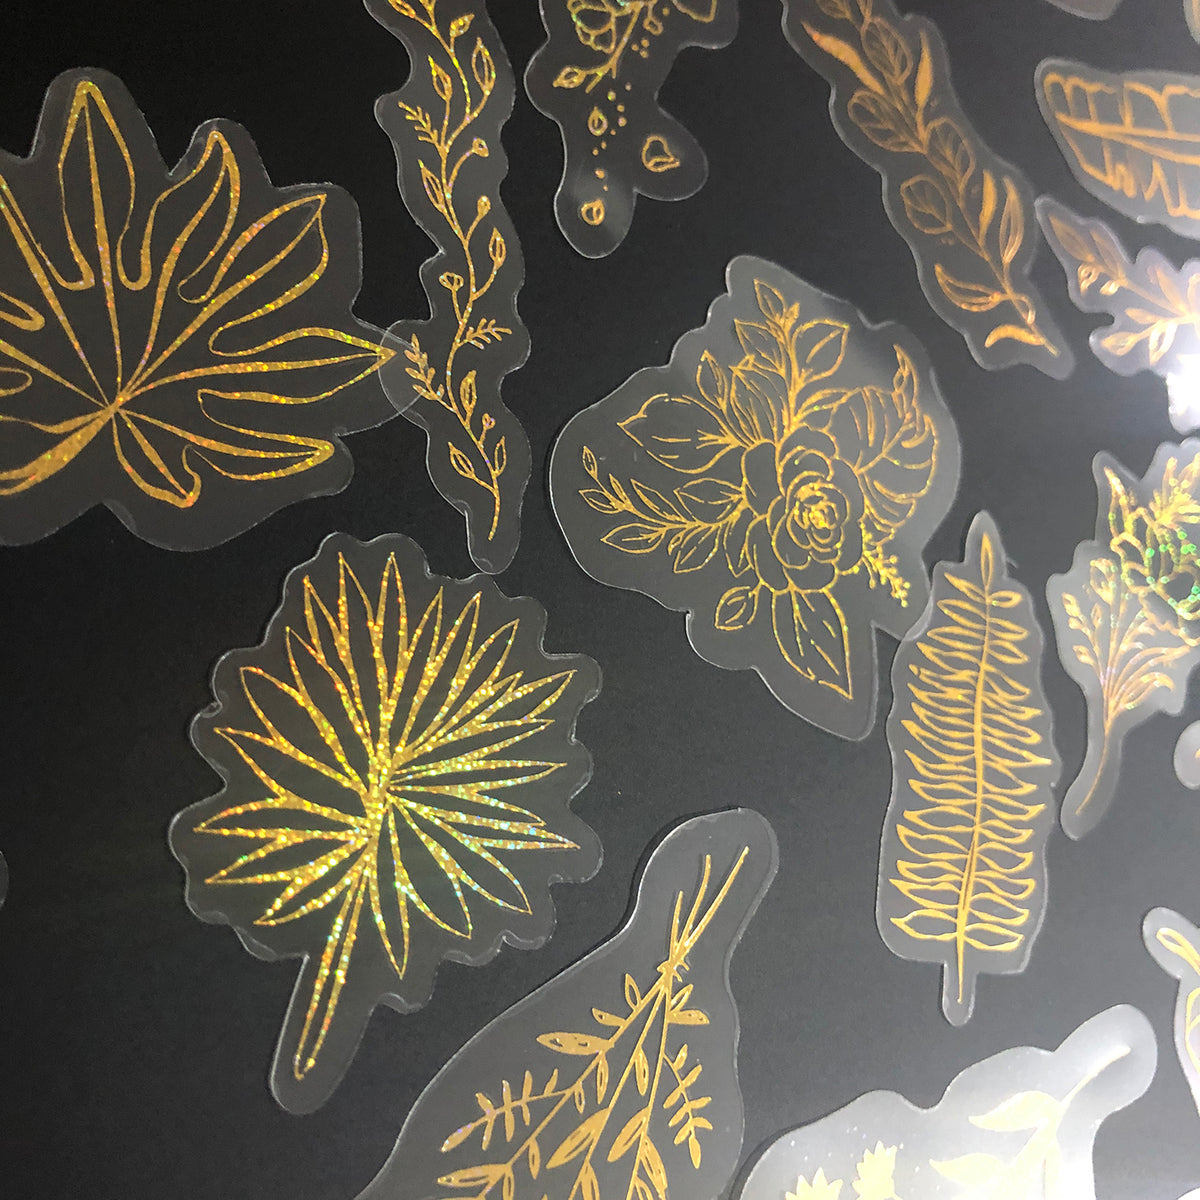 80 Pcs Glitter Gold Stickers Plant Flower,Waterproof Transparent Decorative Decals, PET Adhesive Sticker Label